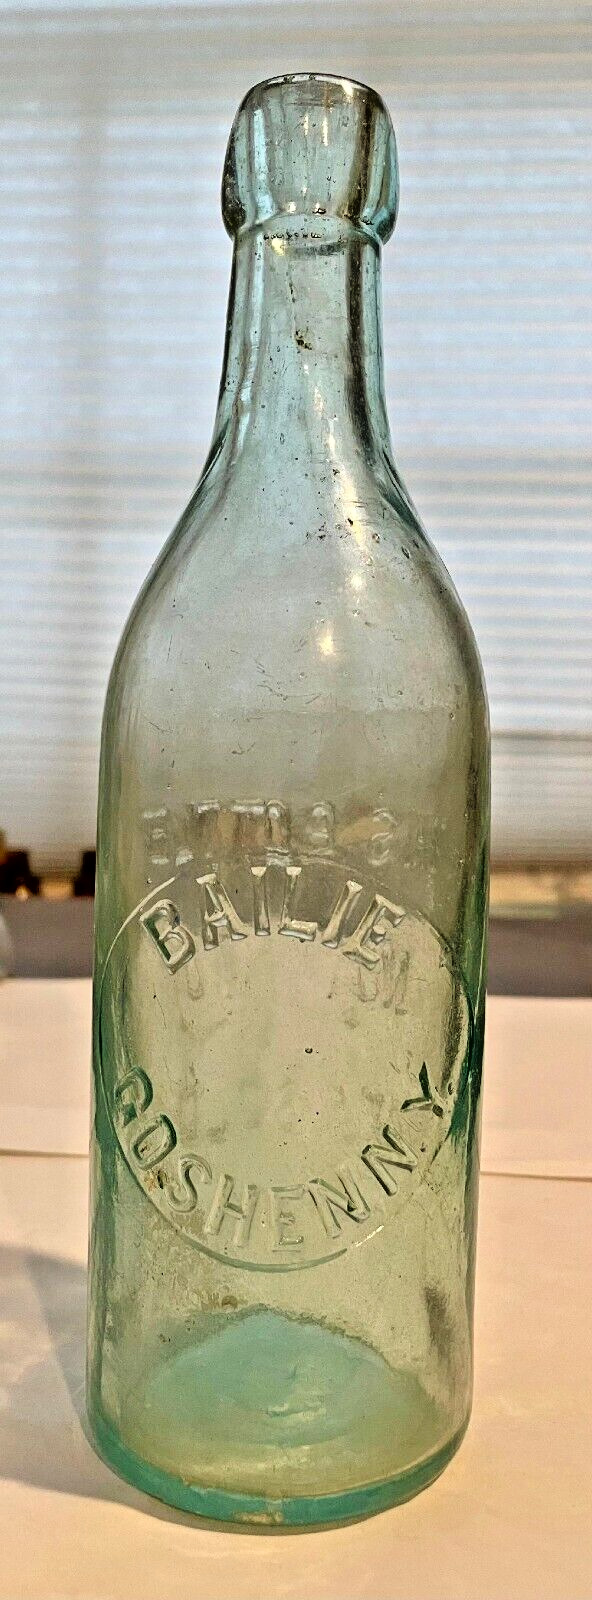 1890s BAILIE Blob Beer Bottle GOSHEN NY Hand Blown ORANGE COUNTY